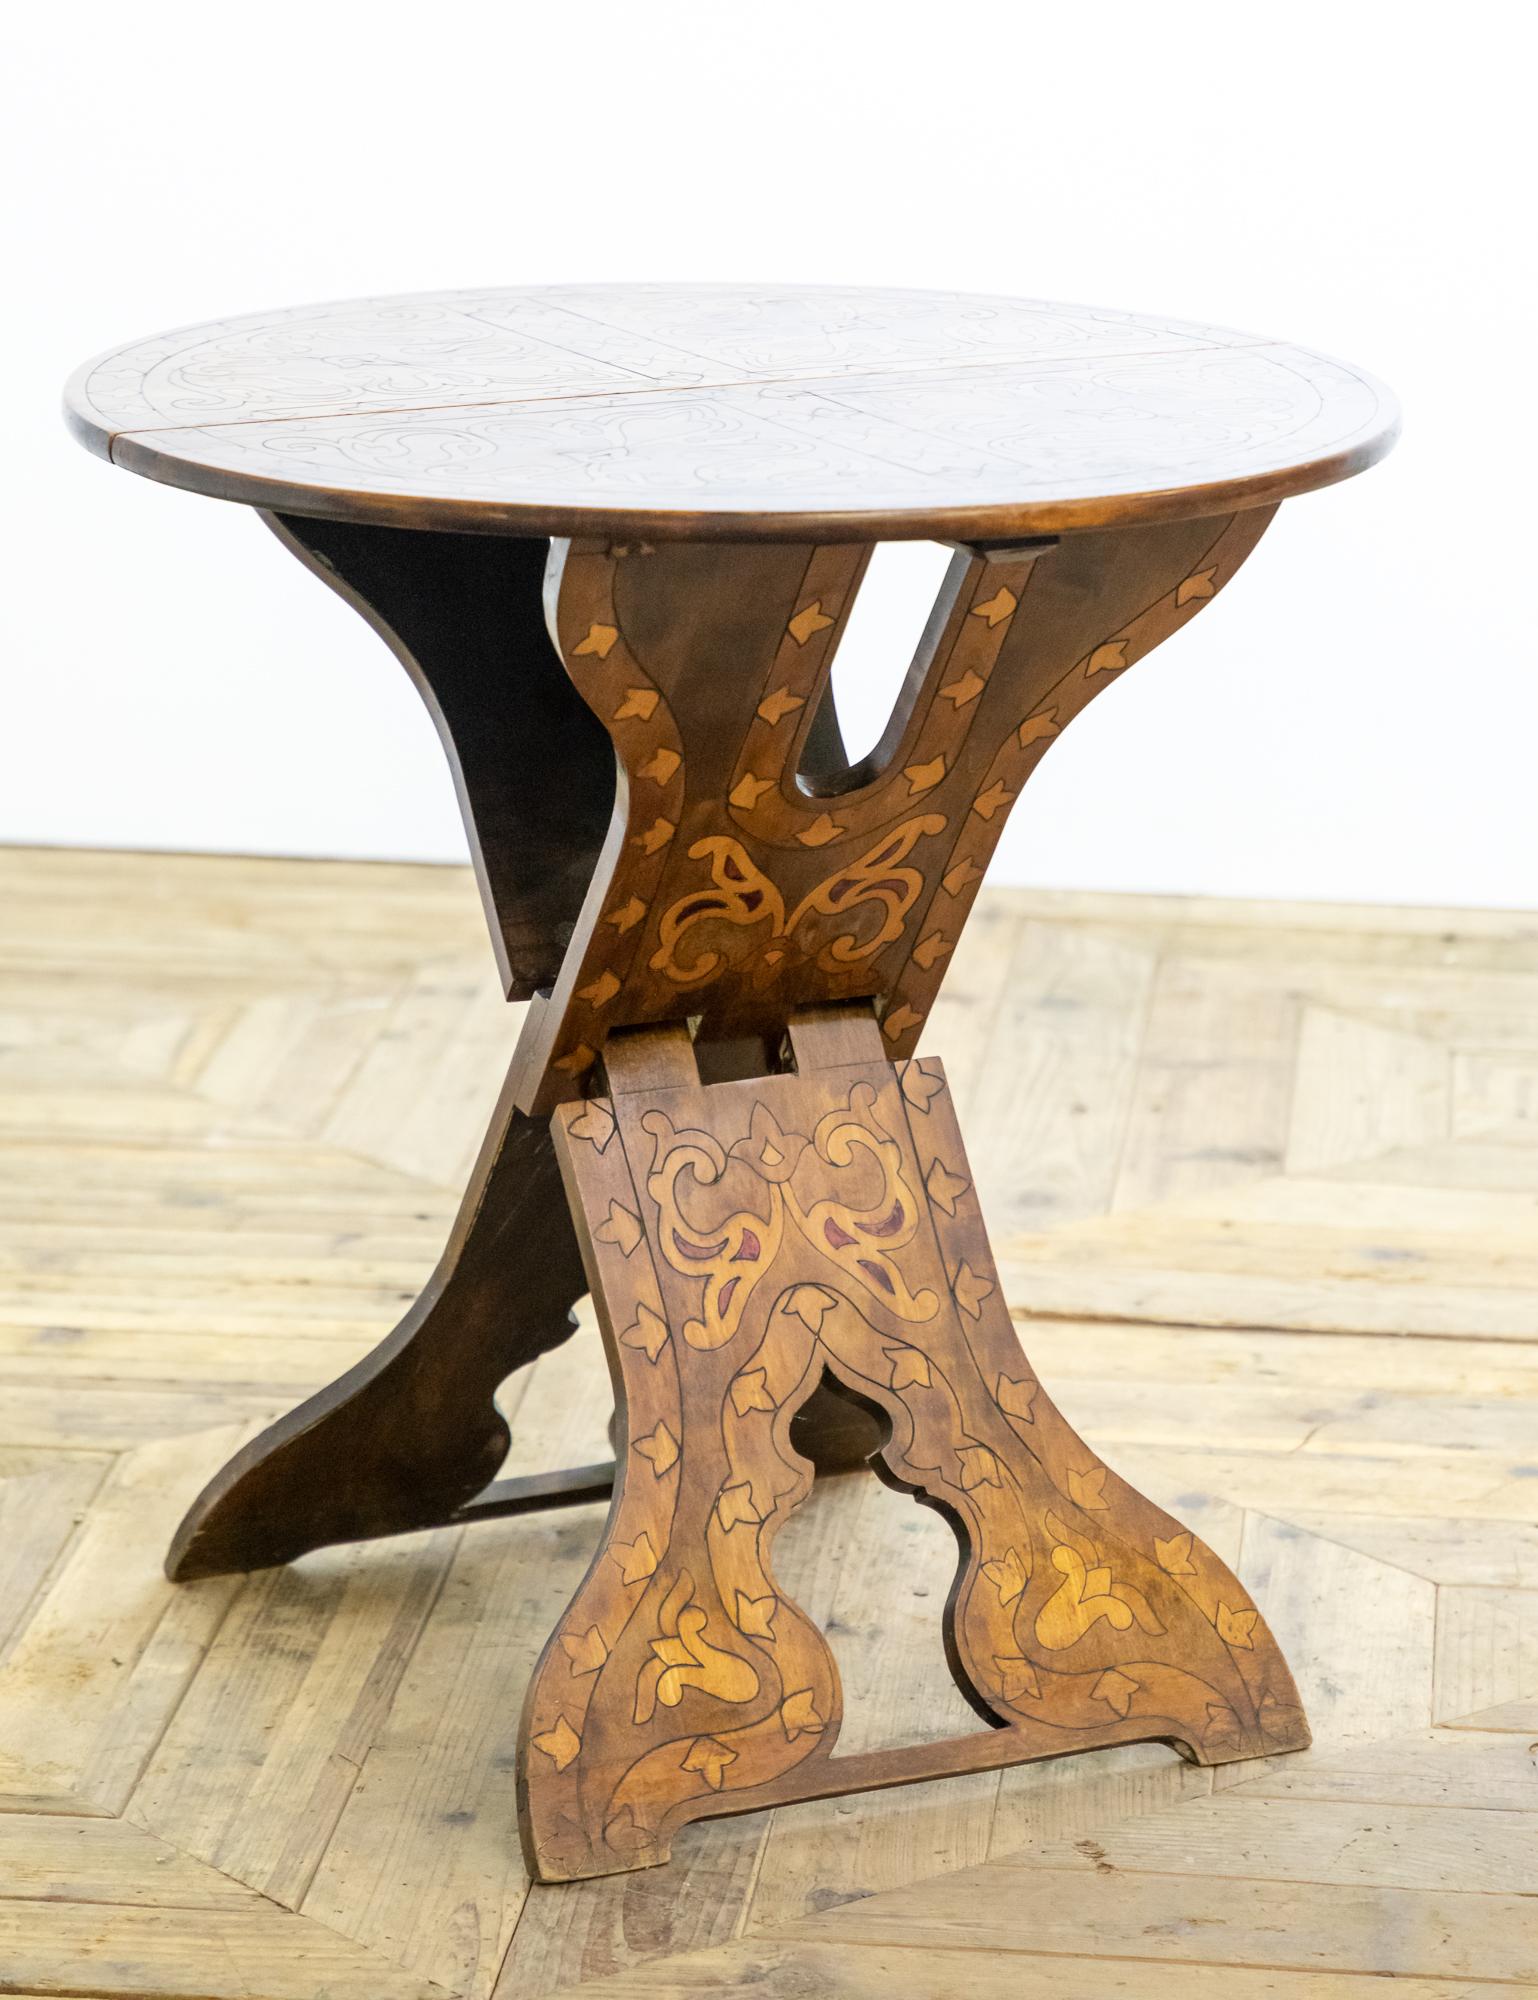 Italian 19th Century Arts & Crafts Moorish Influenced Folding Table For Sale